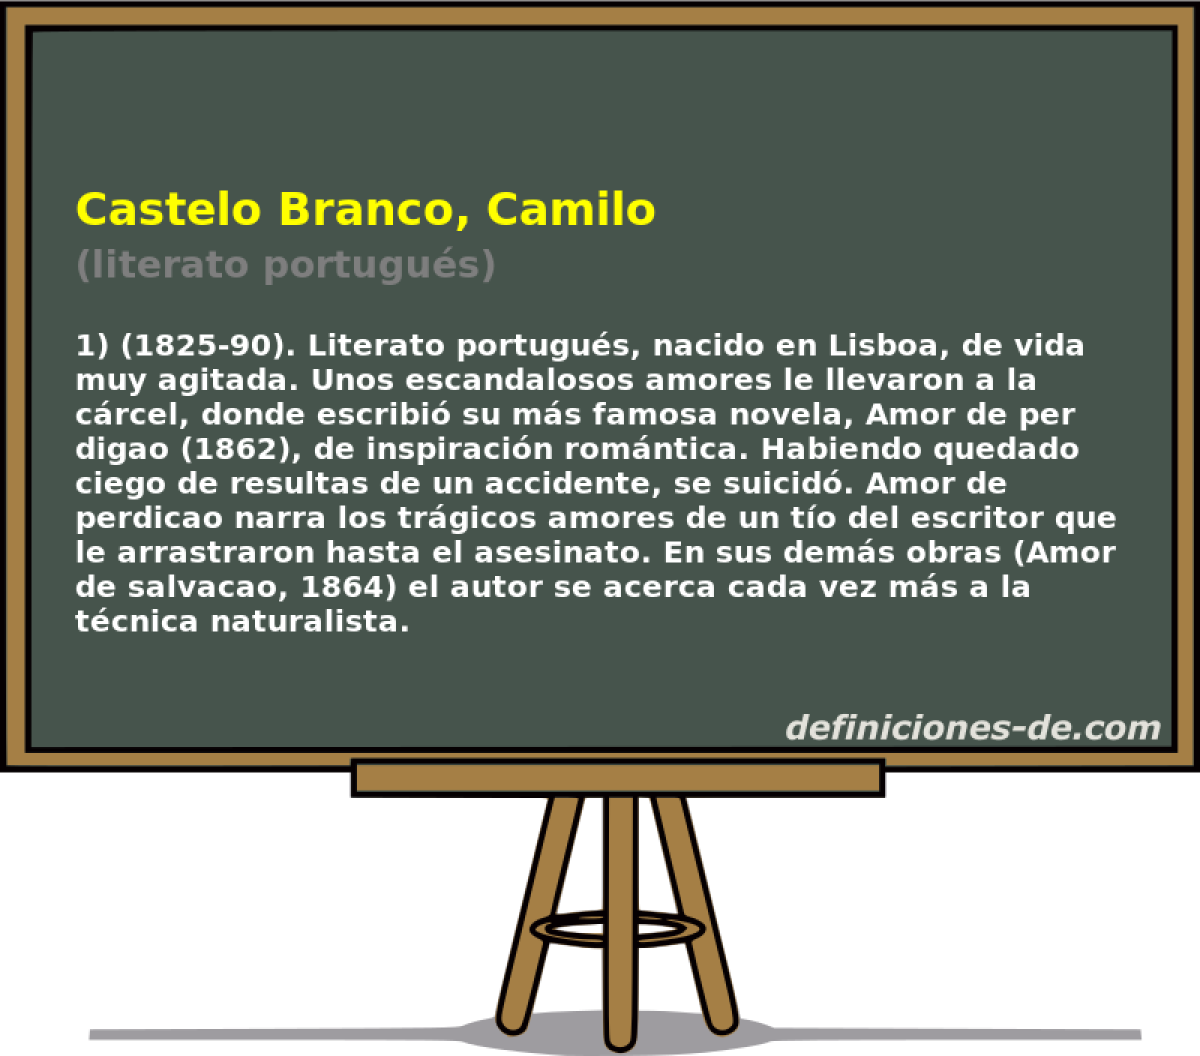 Castelo Branco, Camilo (literato portugus)